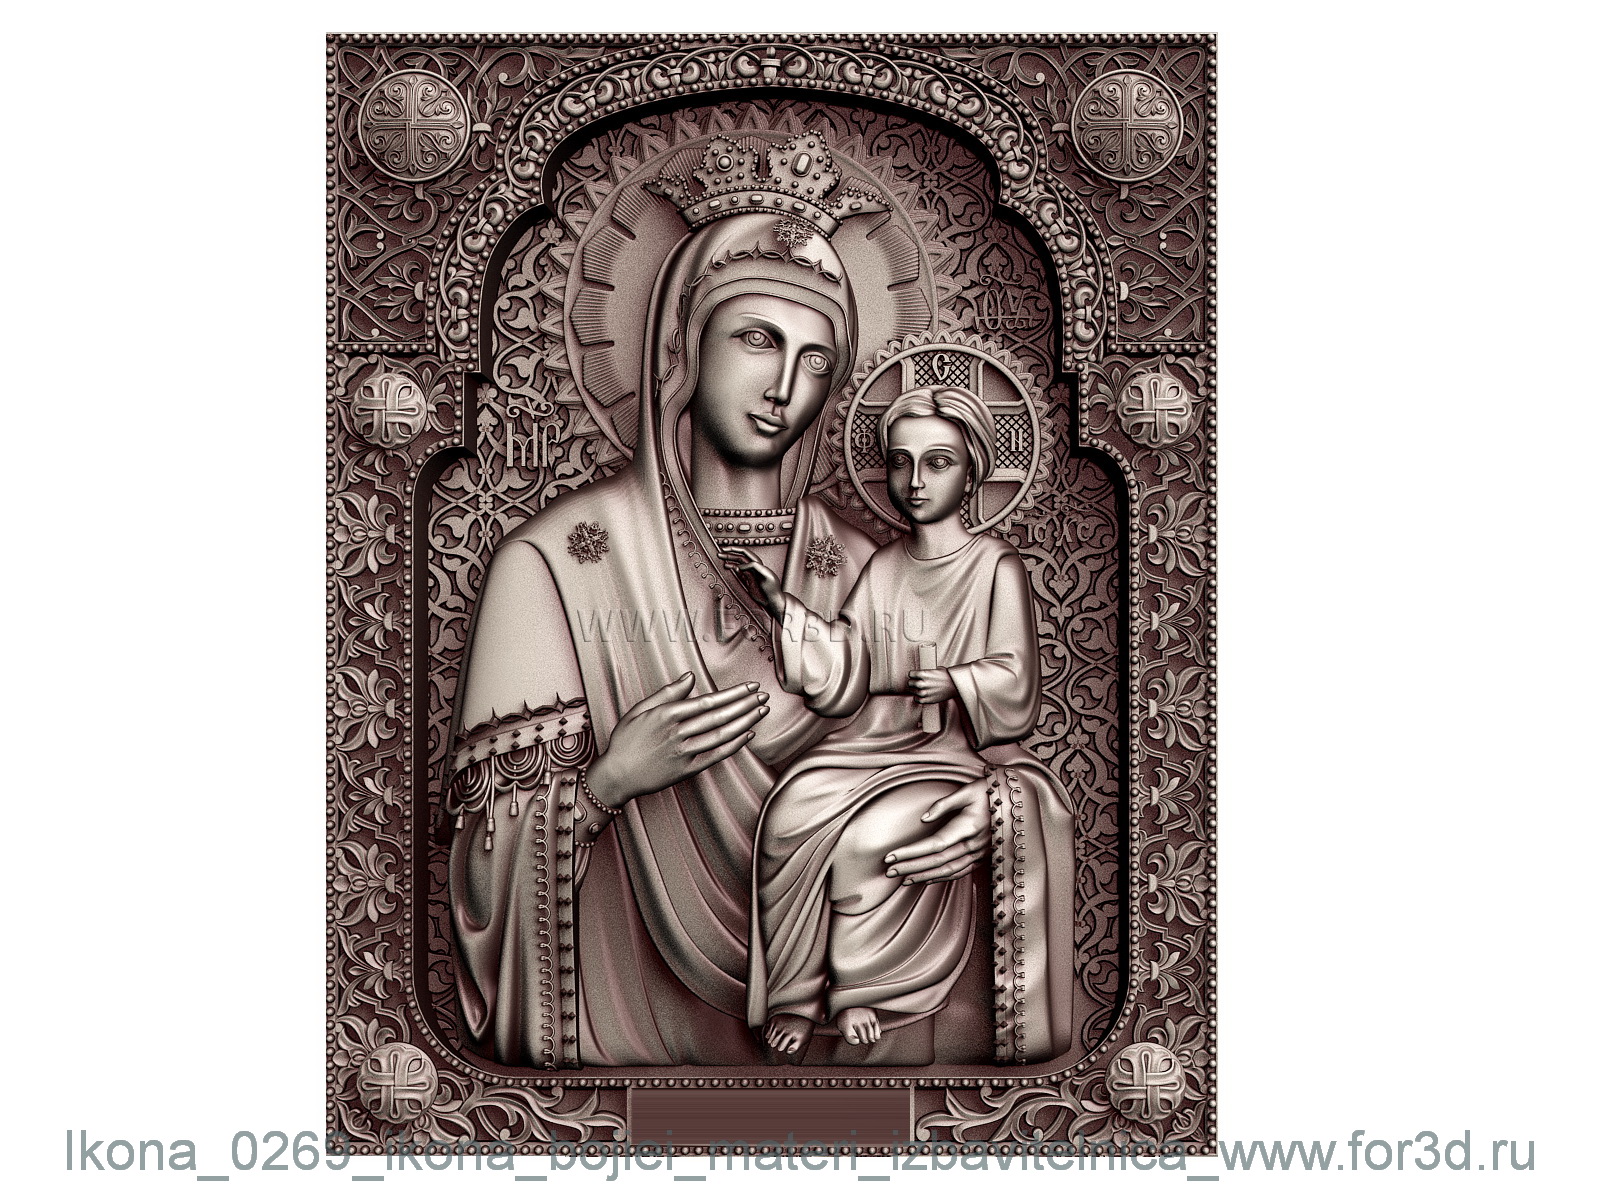 Icon 0269 of Our Lady deliverer | stl - 3d model